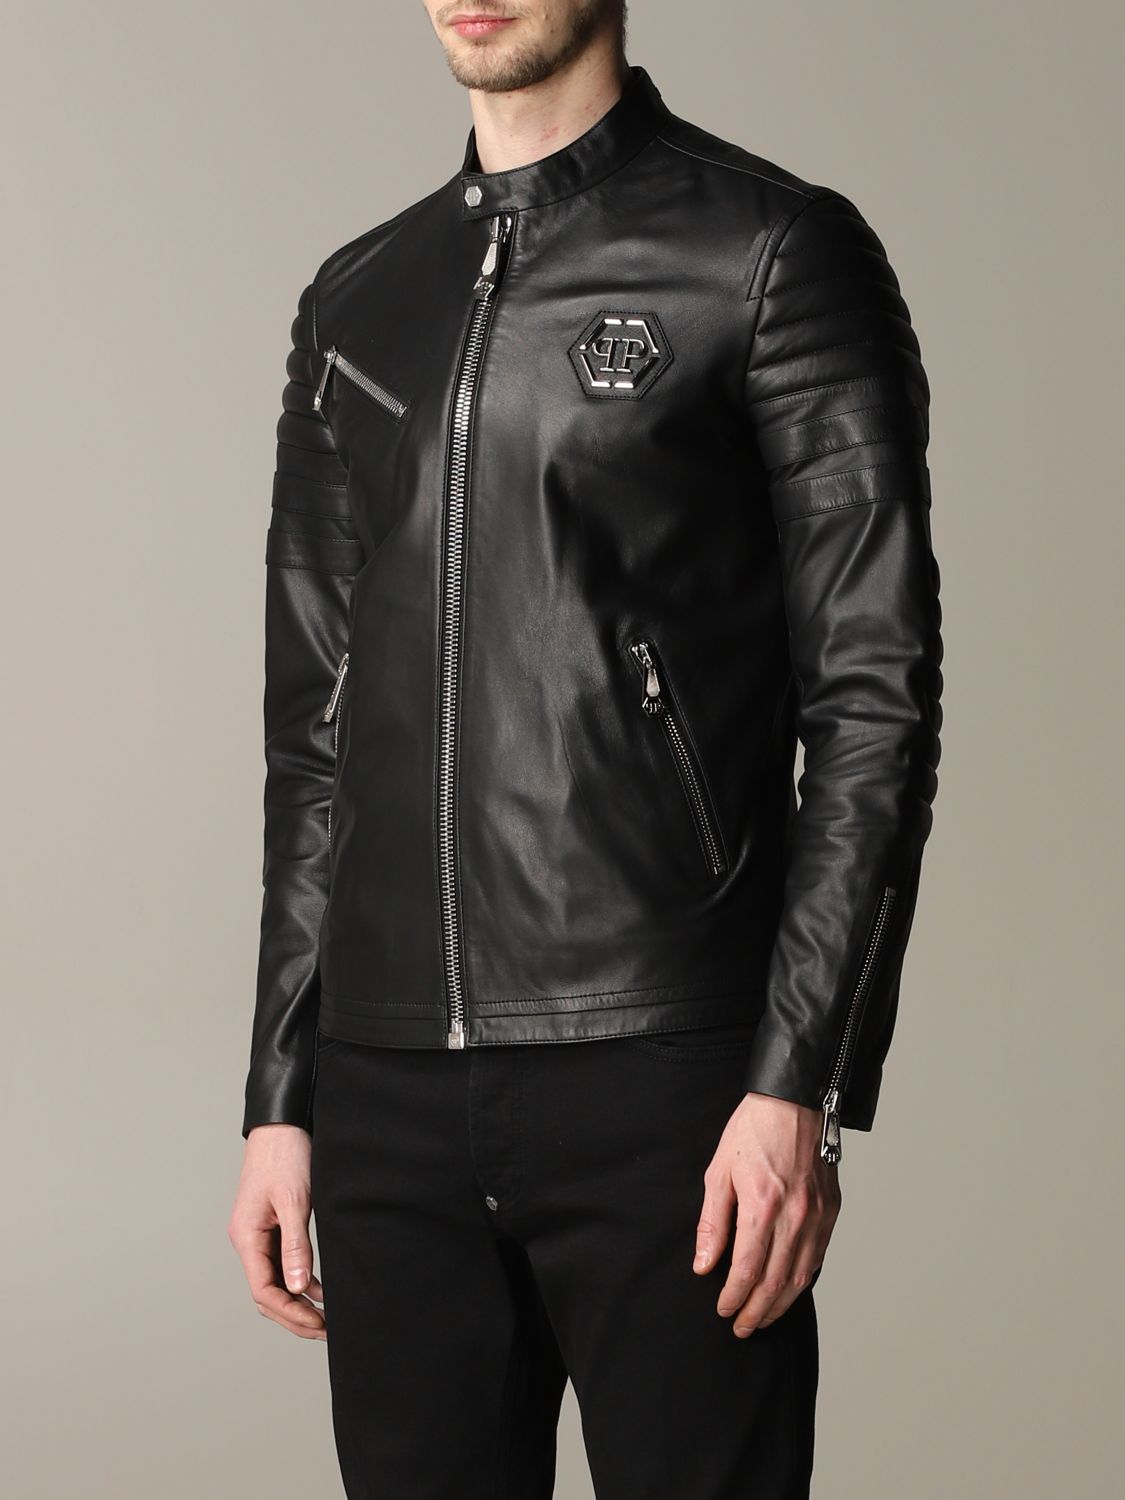 philipp plein leather jacket mens